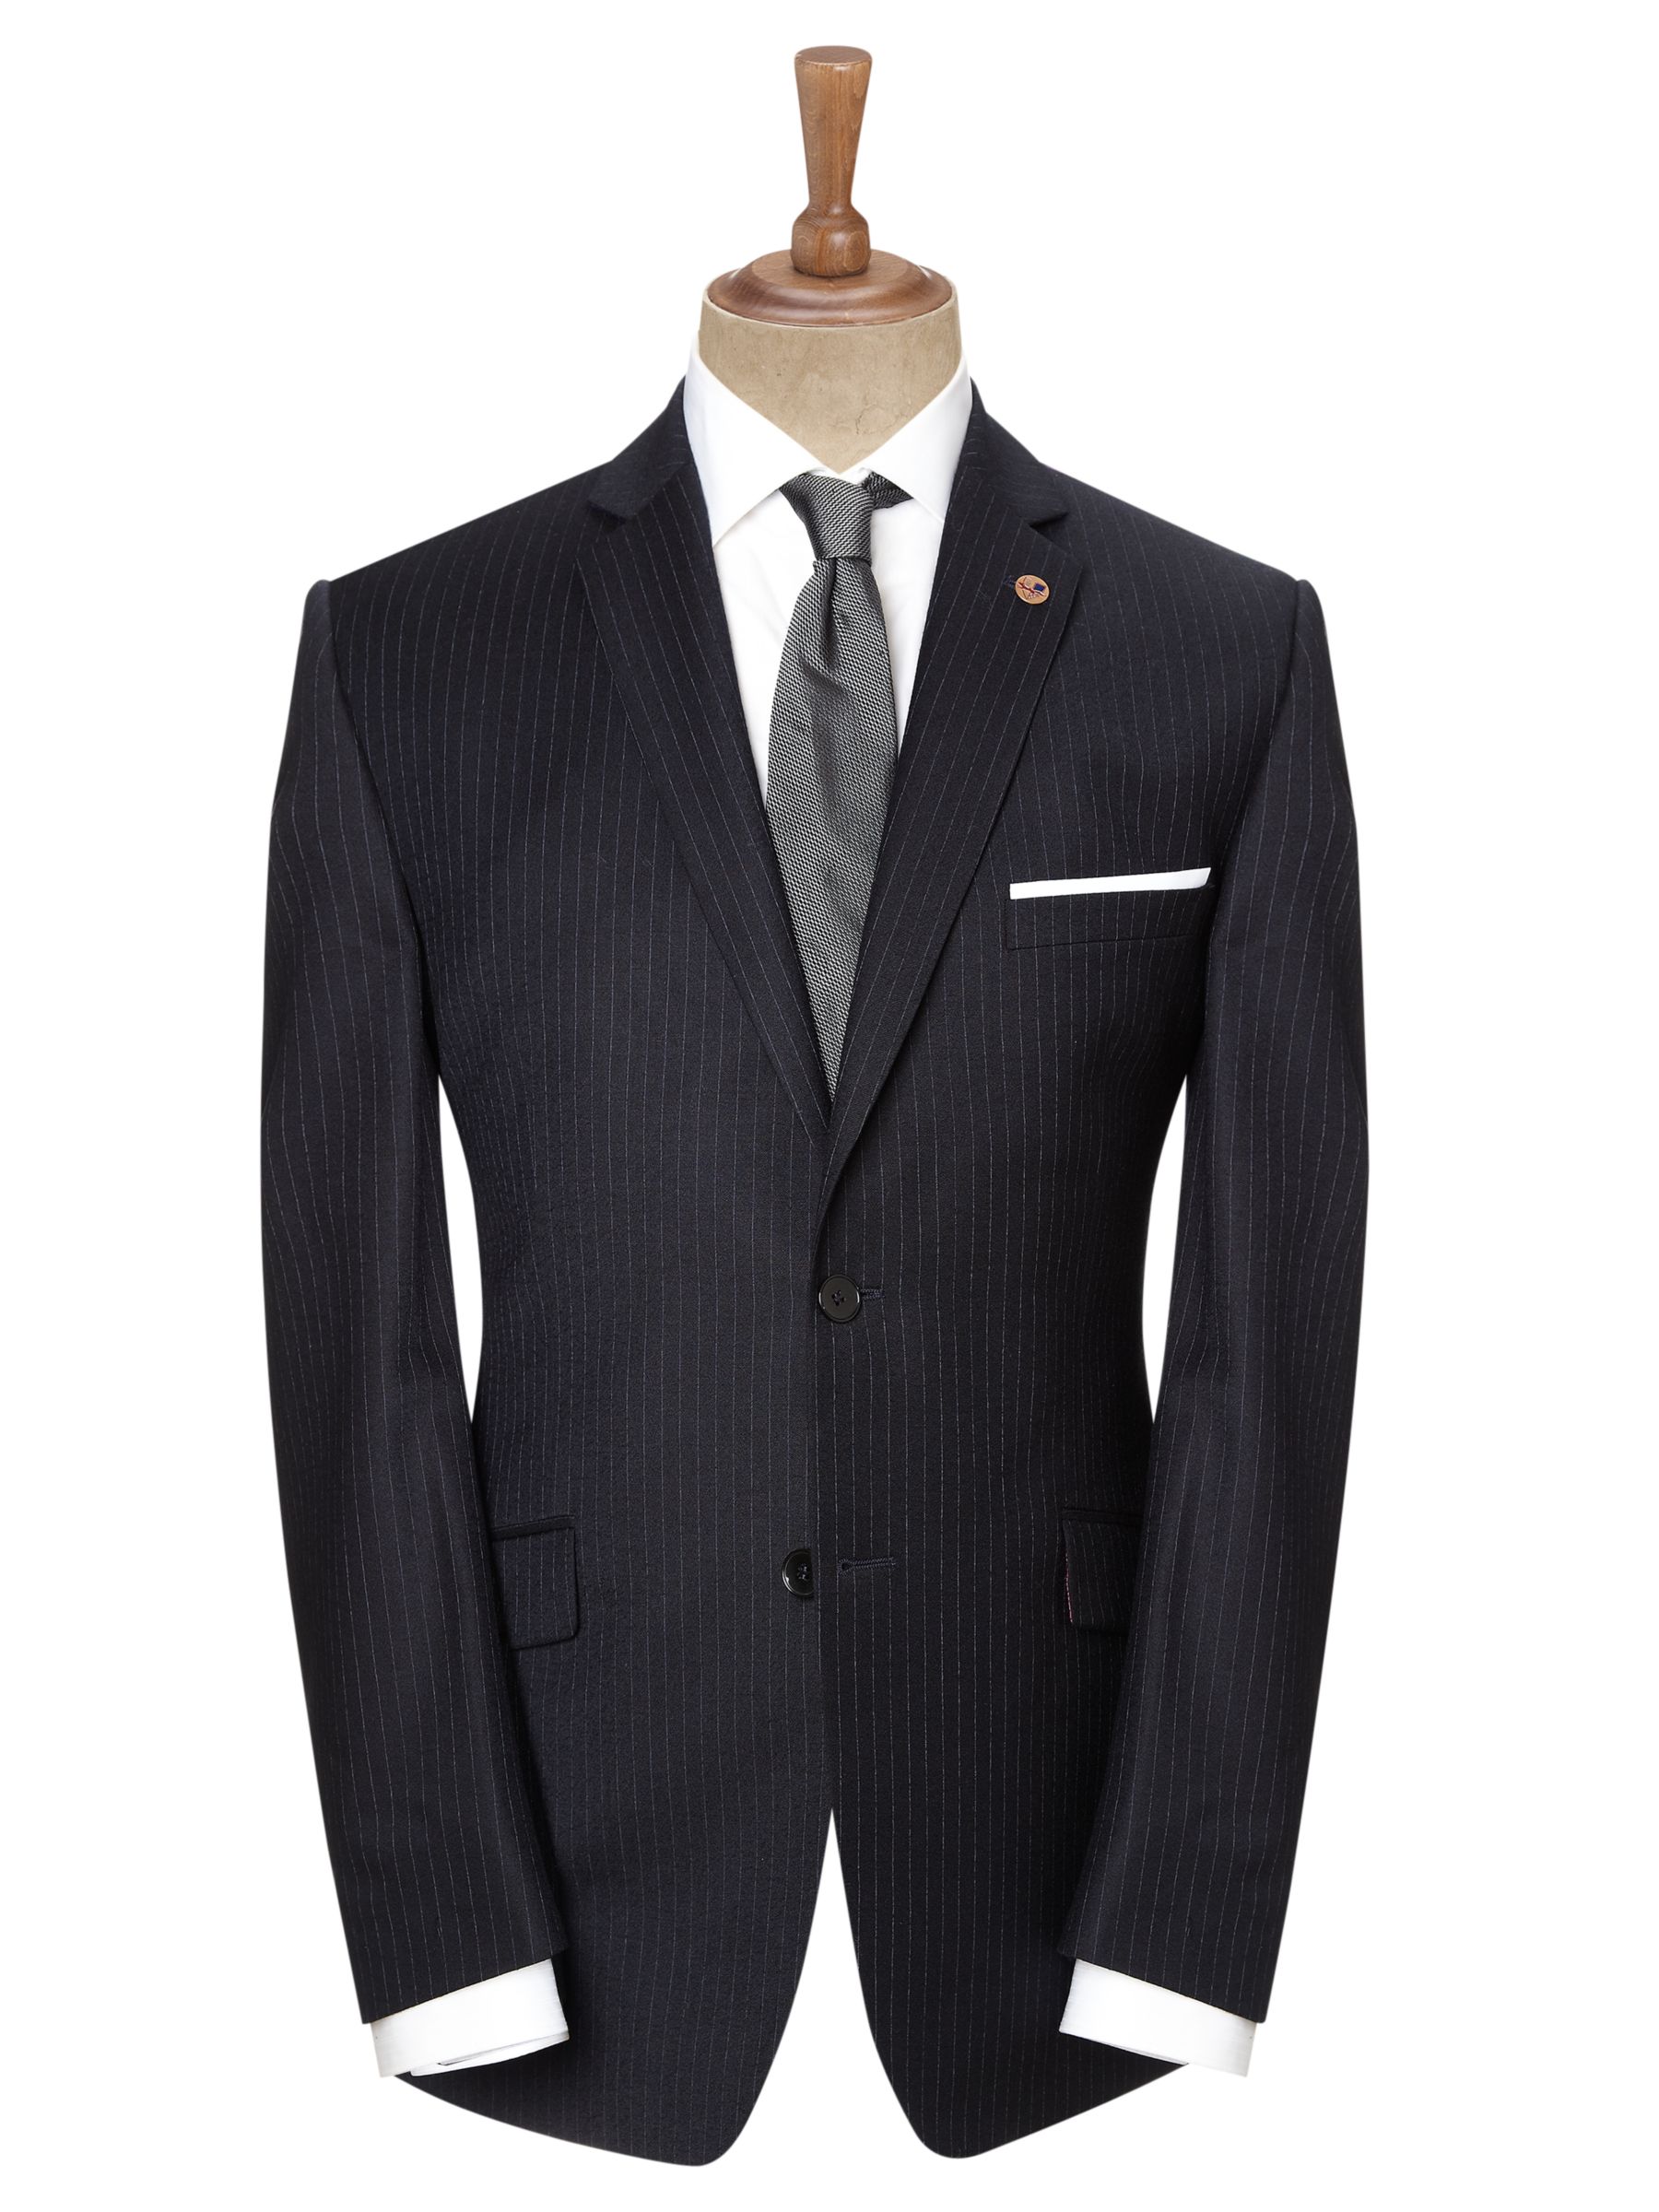 Paul Costelloe Wool Pinstripe Suit Jacket at John Lewis & Partners